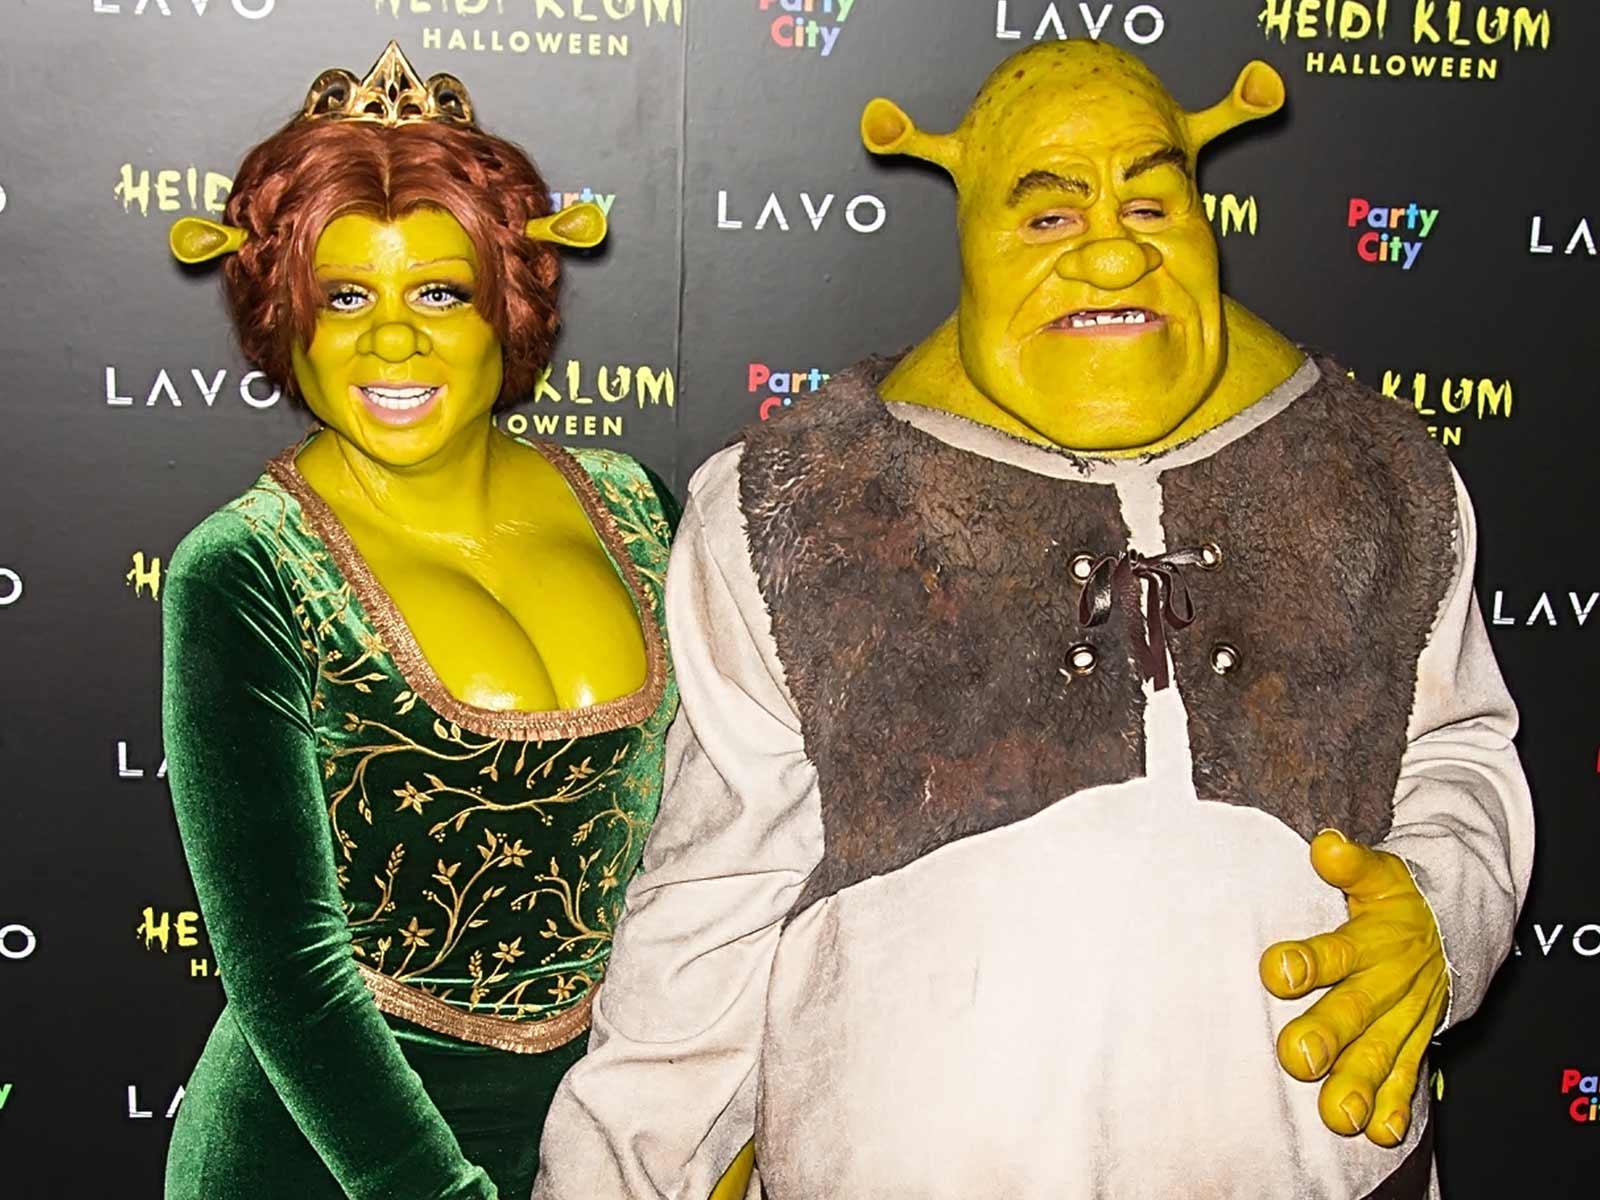 Heidi Klum Wins Halloween Again as Princess Fiona from ‘Shrek’